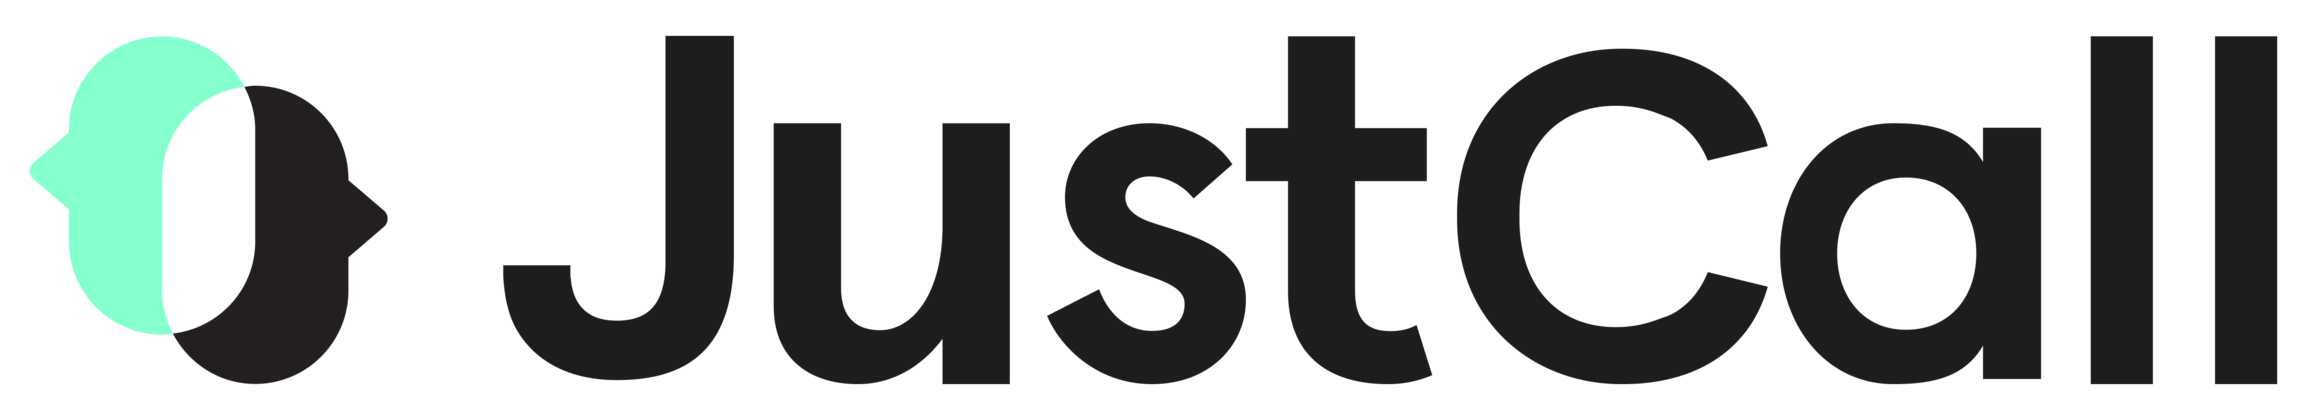 Justcall Logo